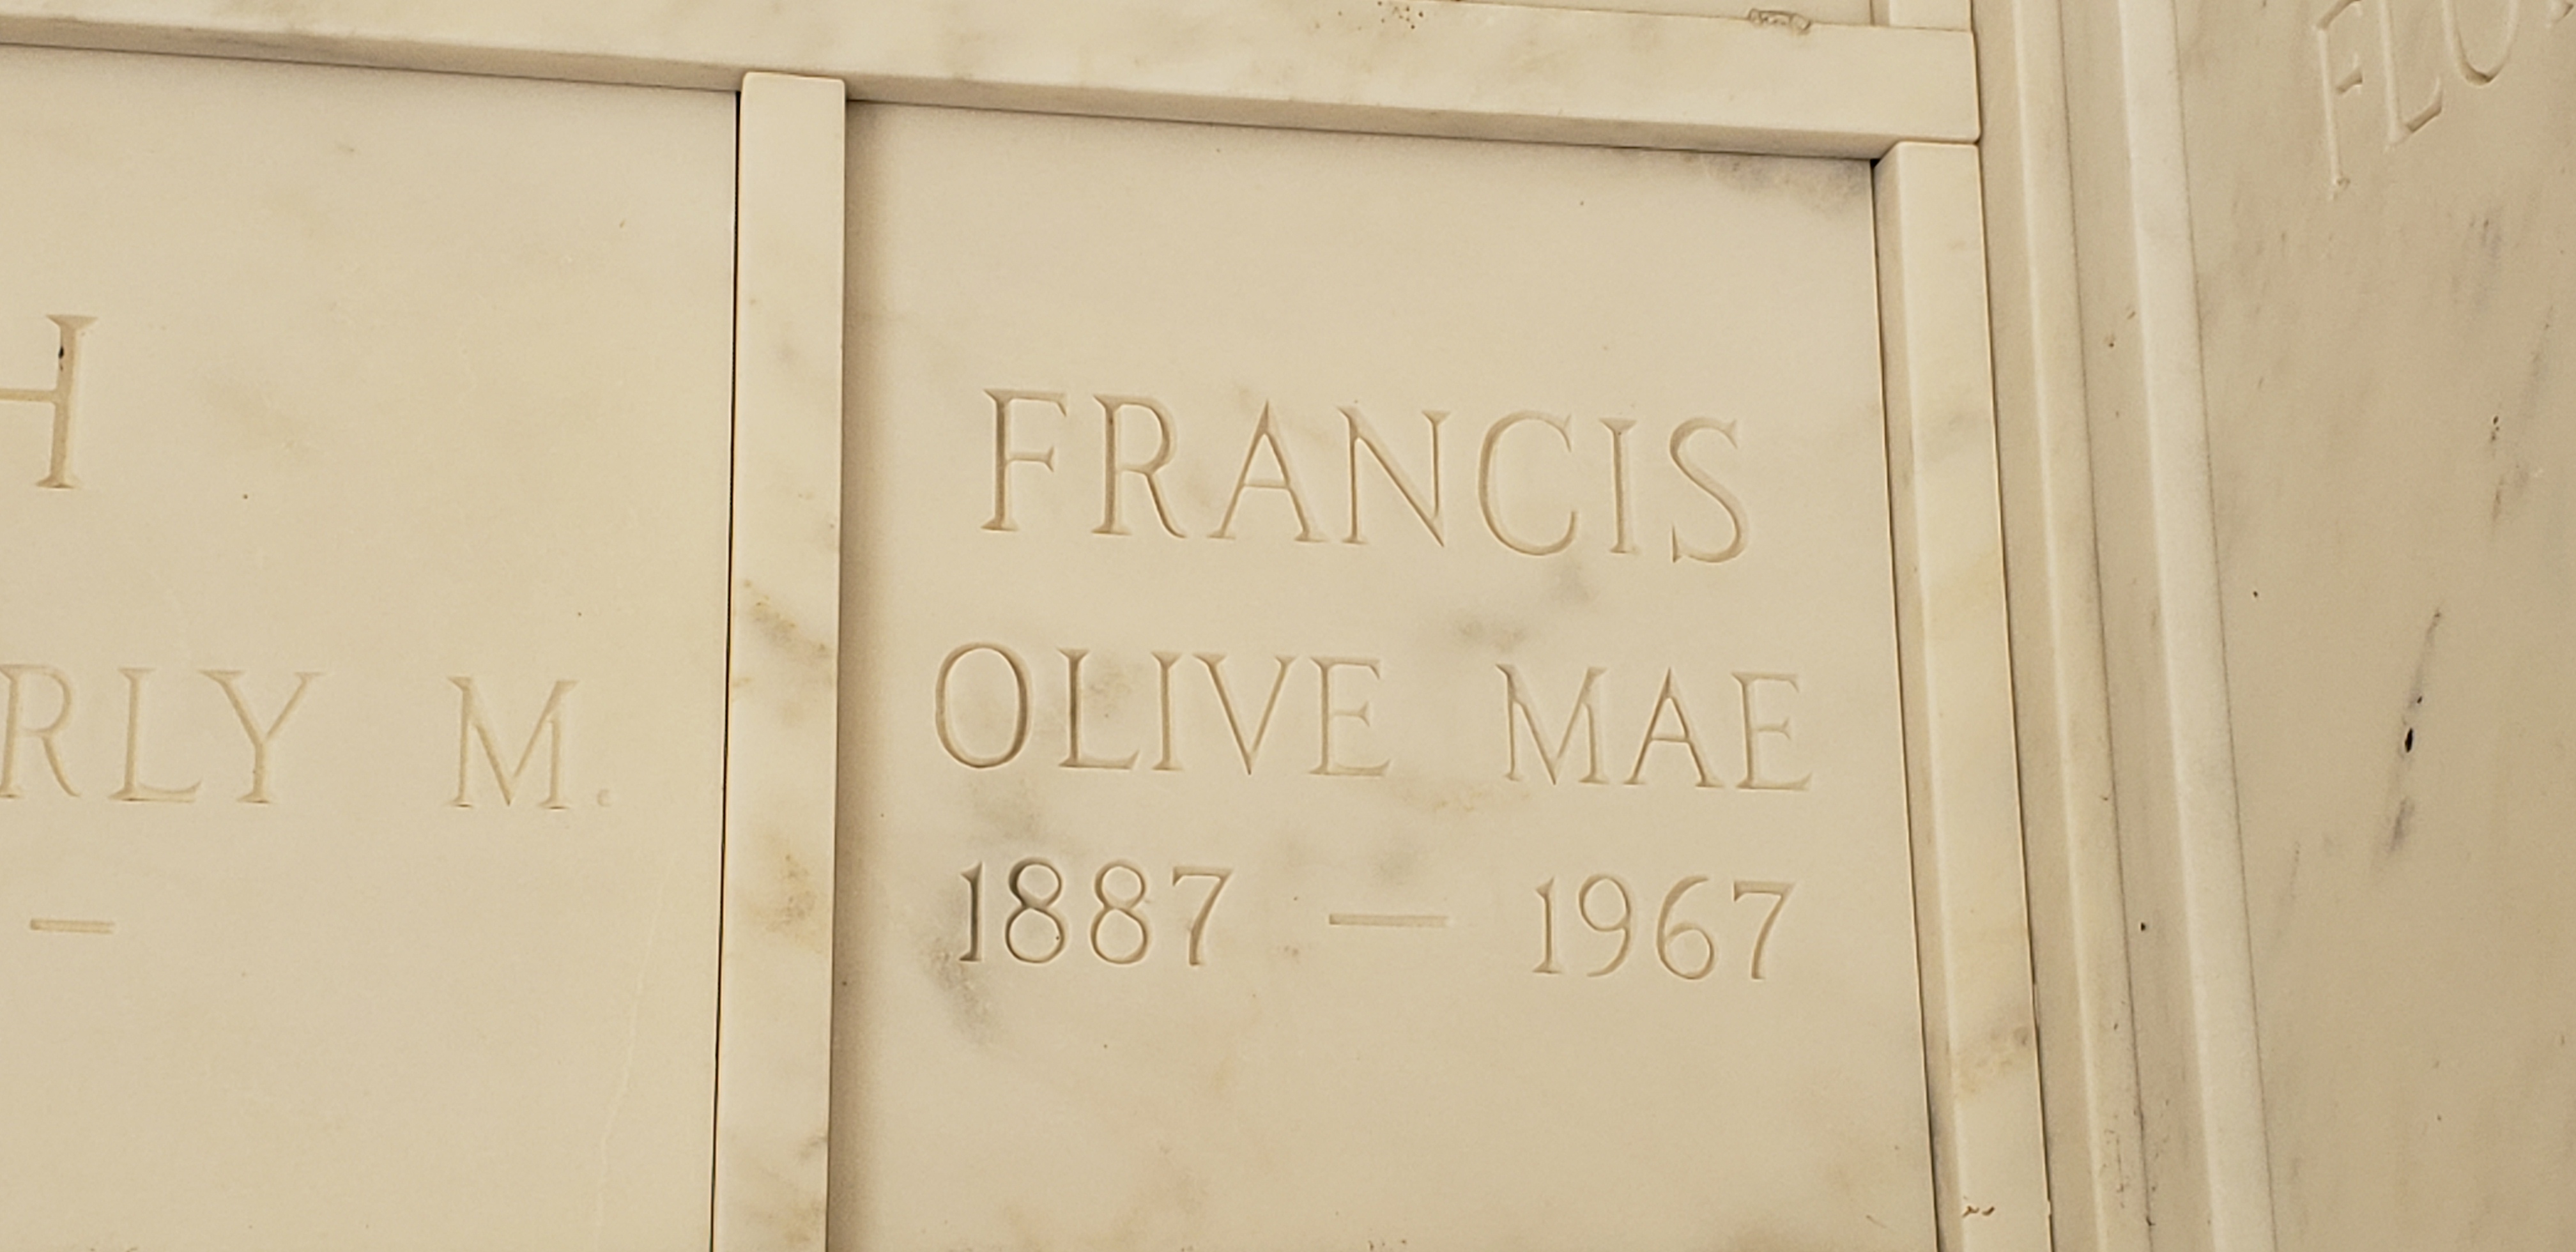 Olive Mae Francis